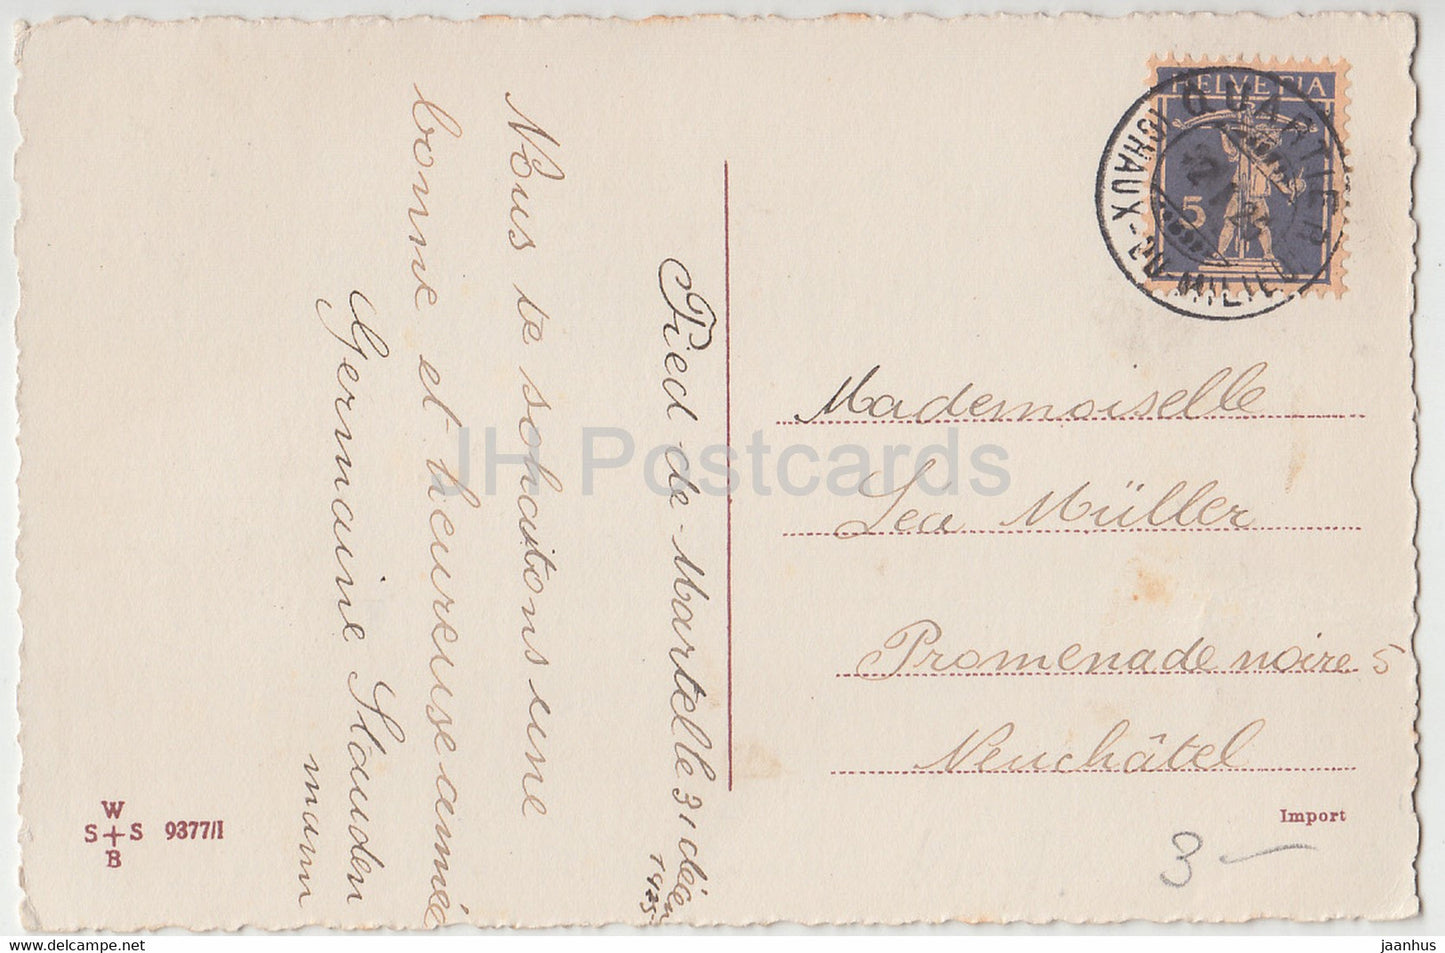 Neujahrsgrußkarte – Bonne Annee – Vögel – Blaumeise – WSSB 9377/I – alte Postkarte – 1926 – Frankreich – gebraucht